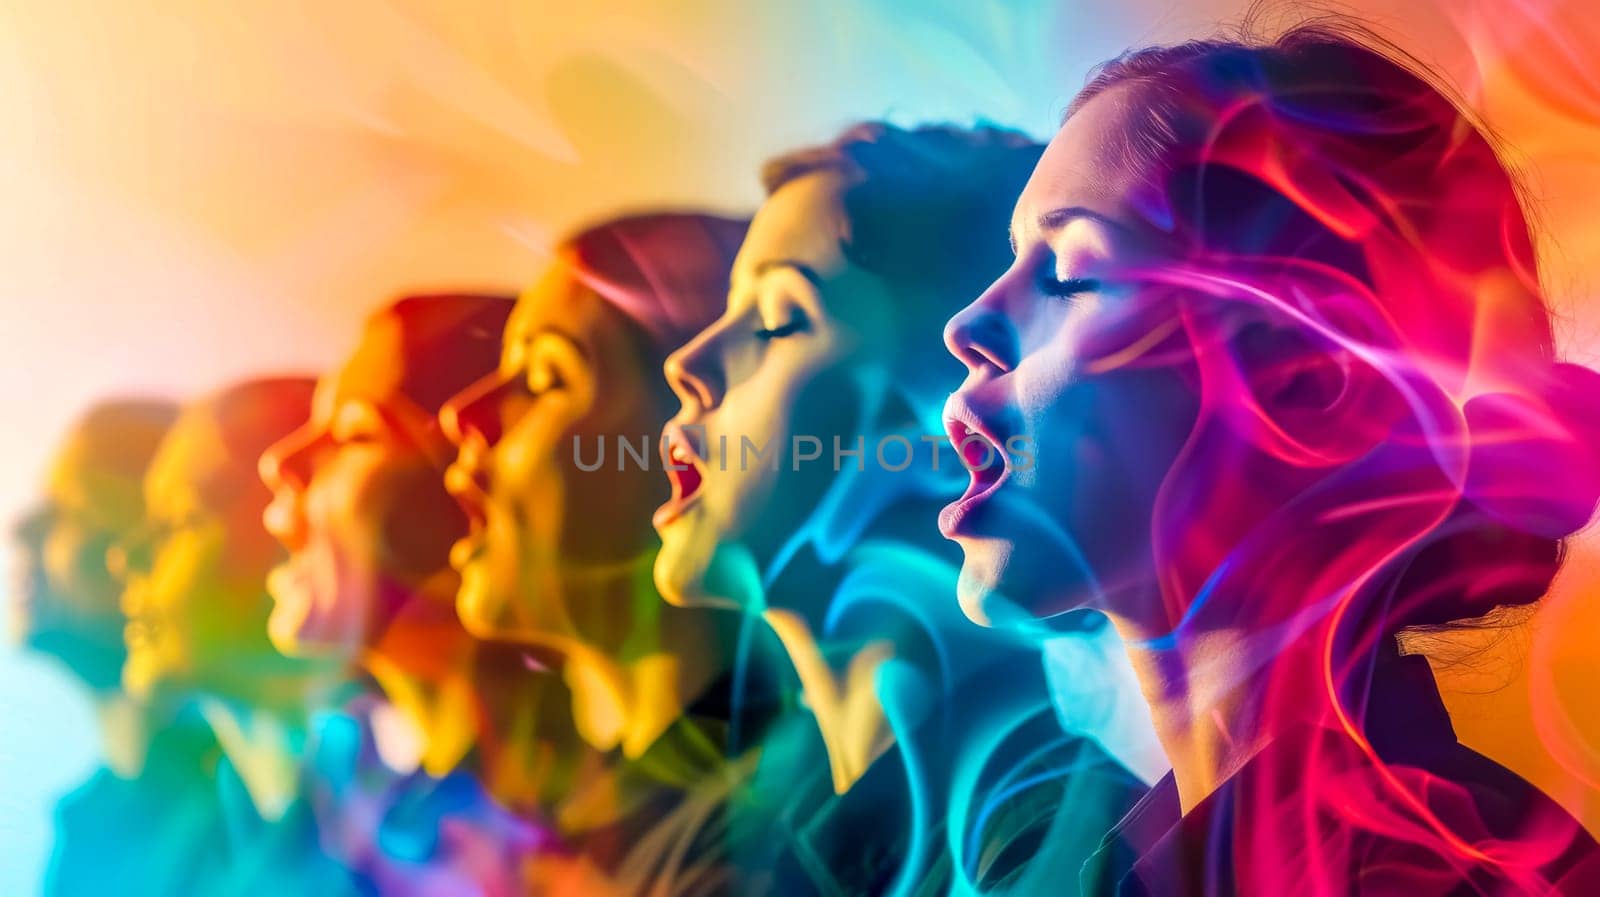 Vibrant spectrum of emotion: multi-colored portrait series by Edophoto